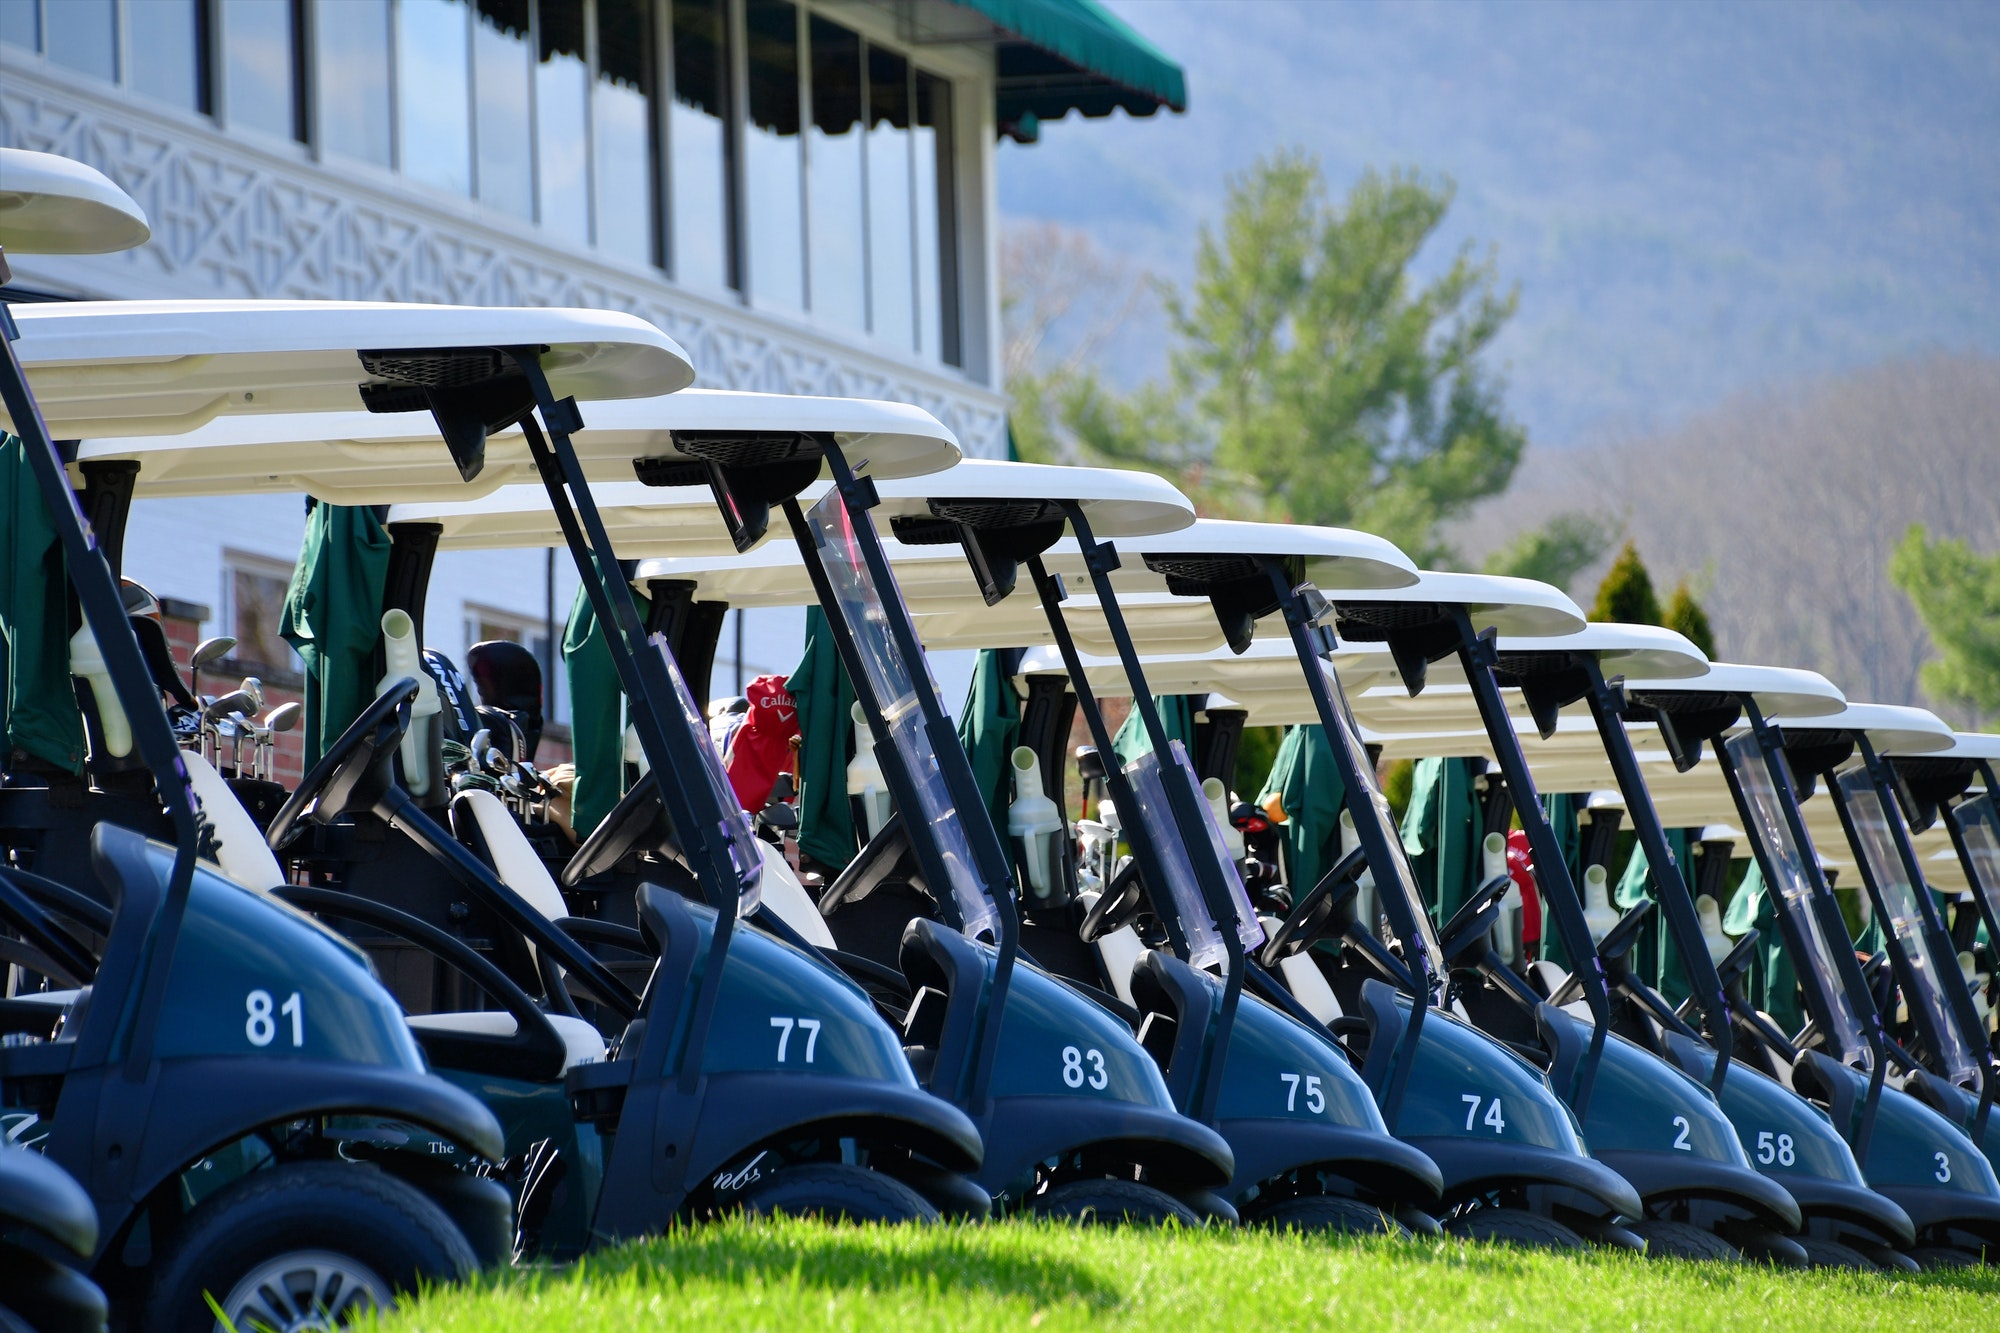 Golf Carts allineati in un campo da golf